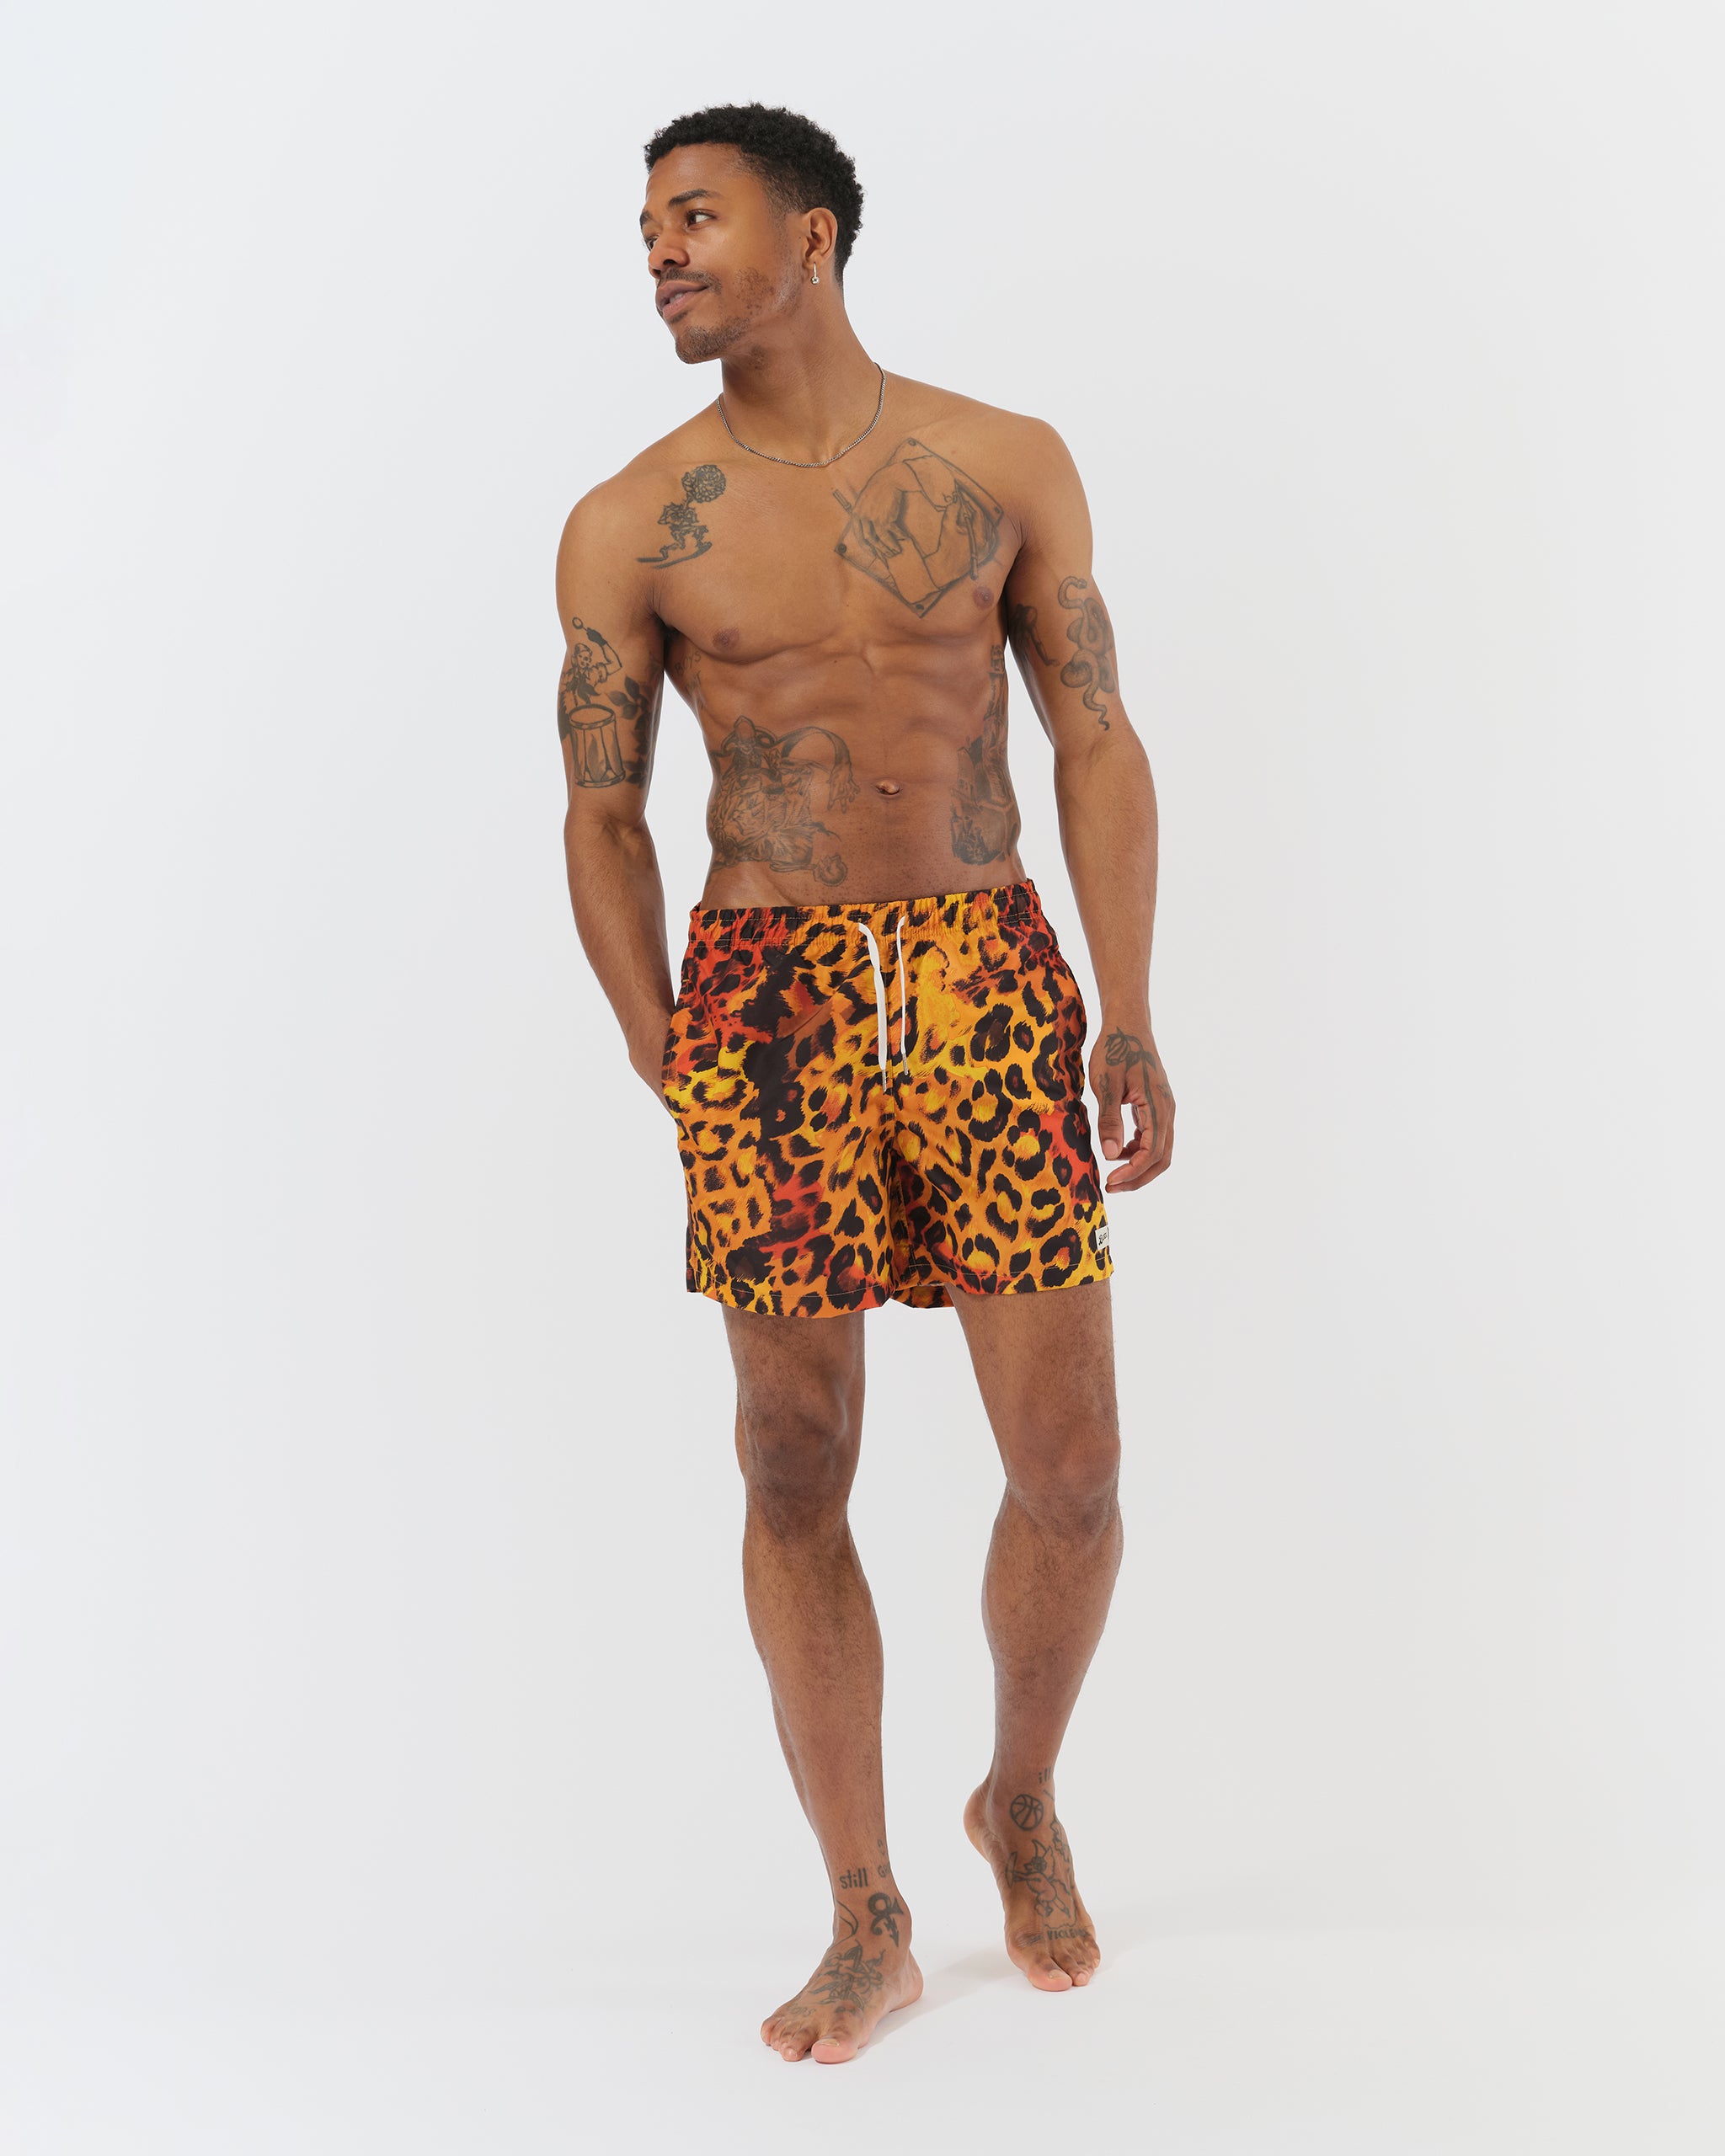 orange Bather swim trunk with a black leopard pattern on model